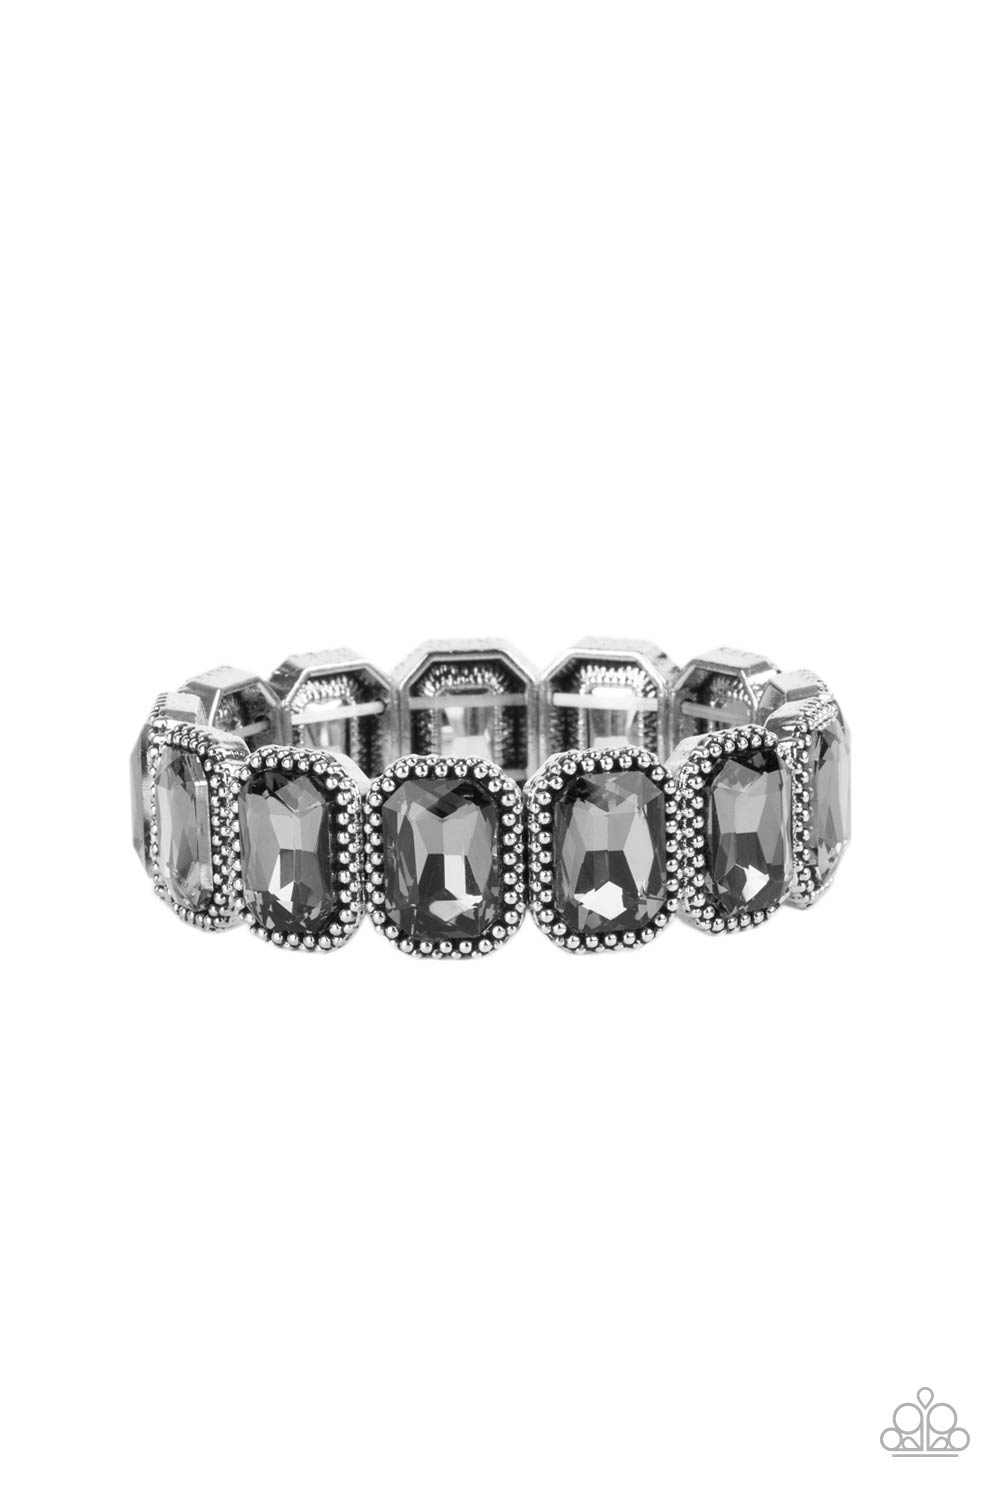 Paparazzi Studded Smolder - Silver Bracelet - A Finishing Touch Jewelry